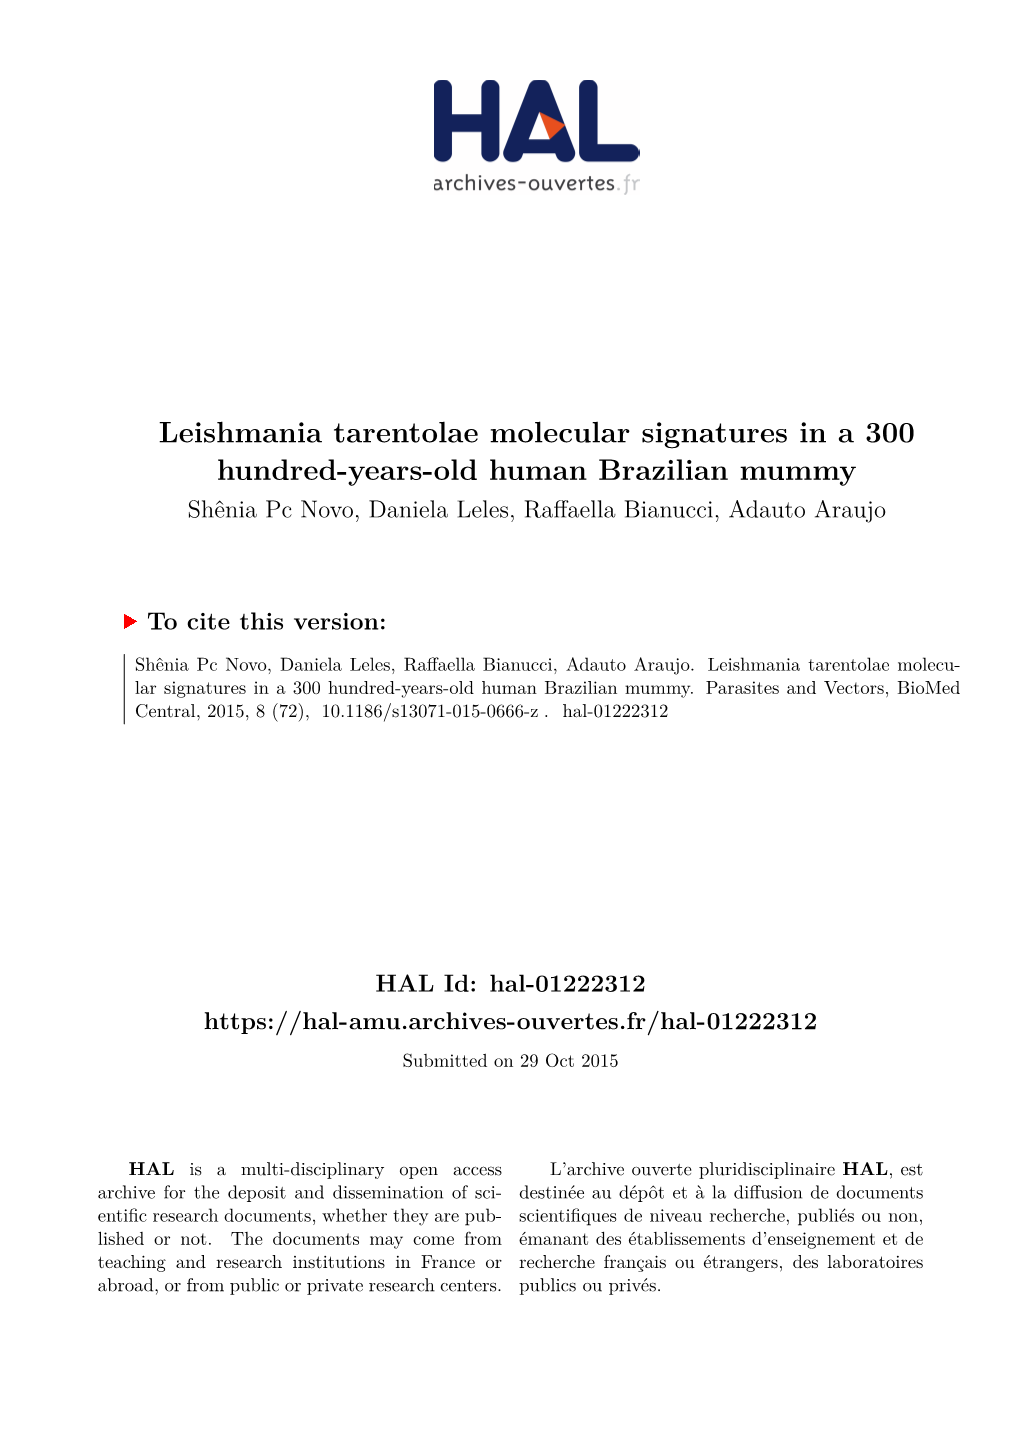 Leishmania Tarentolae Molecular Signatures in a 300 Hundred-Years-Old Human Brazilian Mummy Shênia Pc Novo, Daniela Leles, Raffaella Bianucci, Adauto Araujo